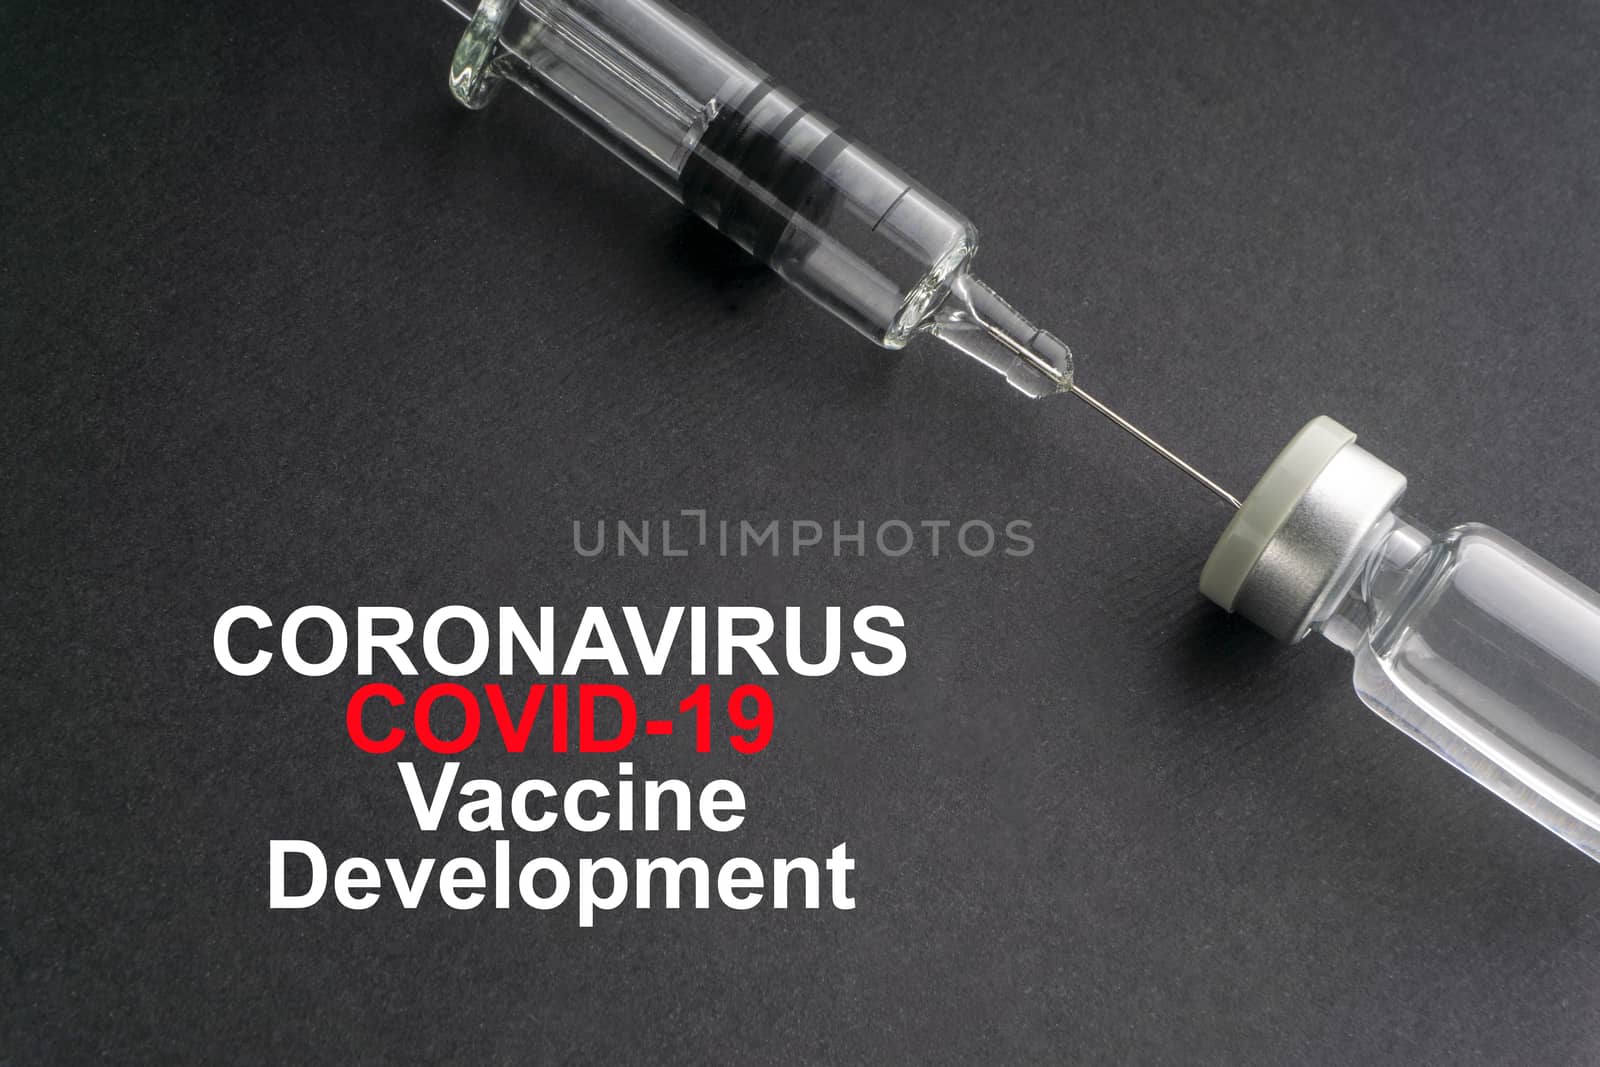 CORONAVIRUS COVID-19 VACCINE DEVELOPMENT text with syringe and vials on black background. Covid-19 and Coronavirus concept